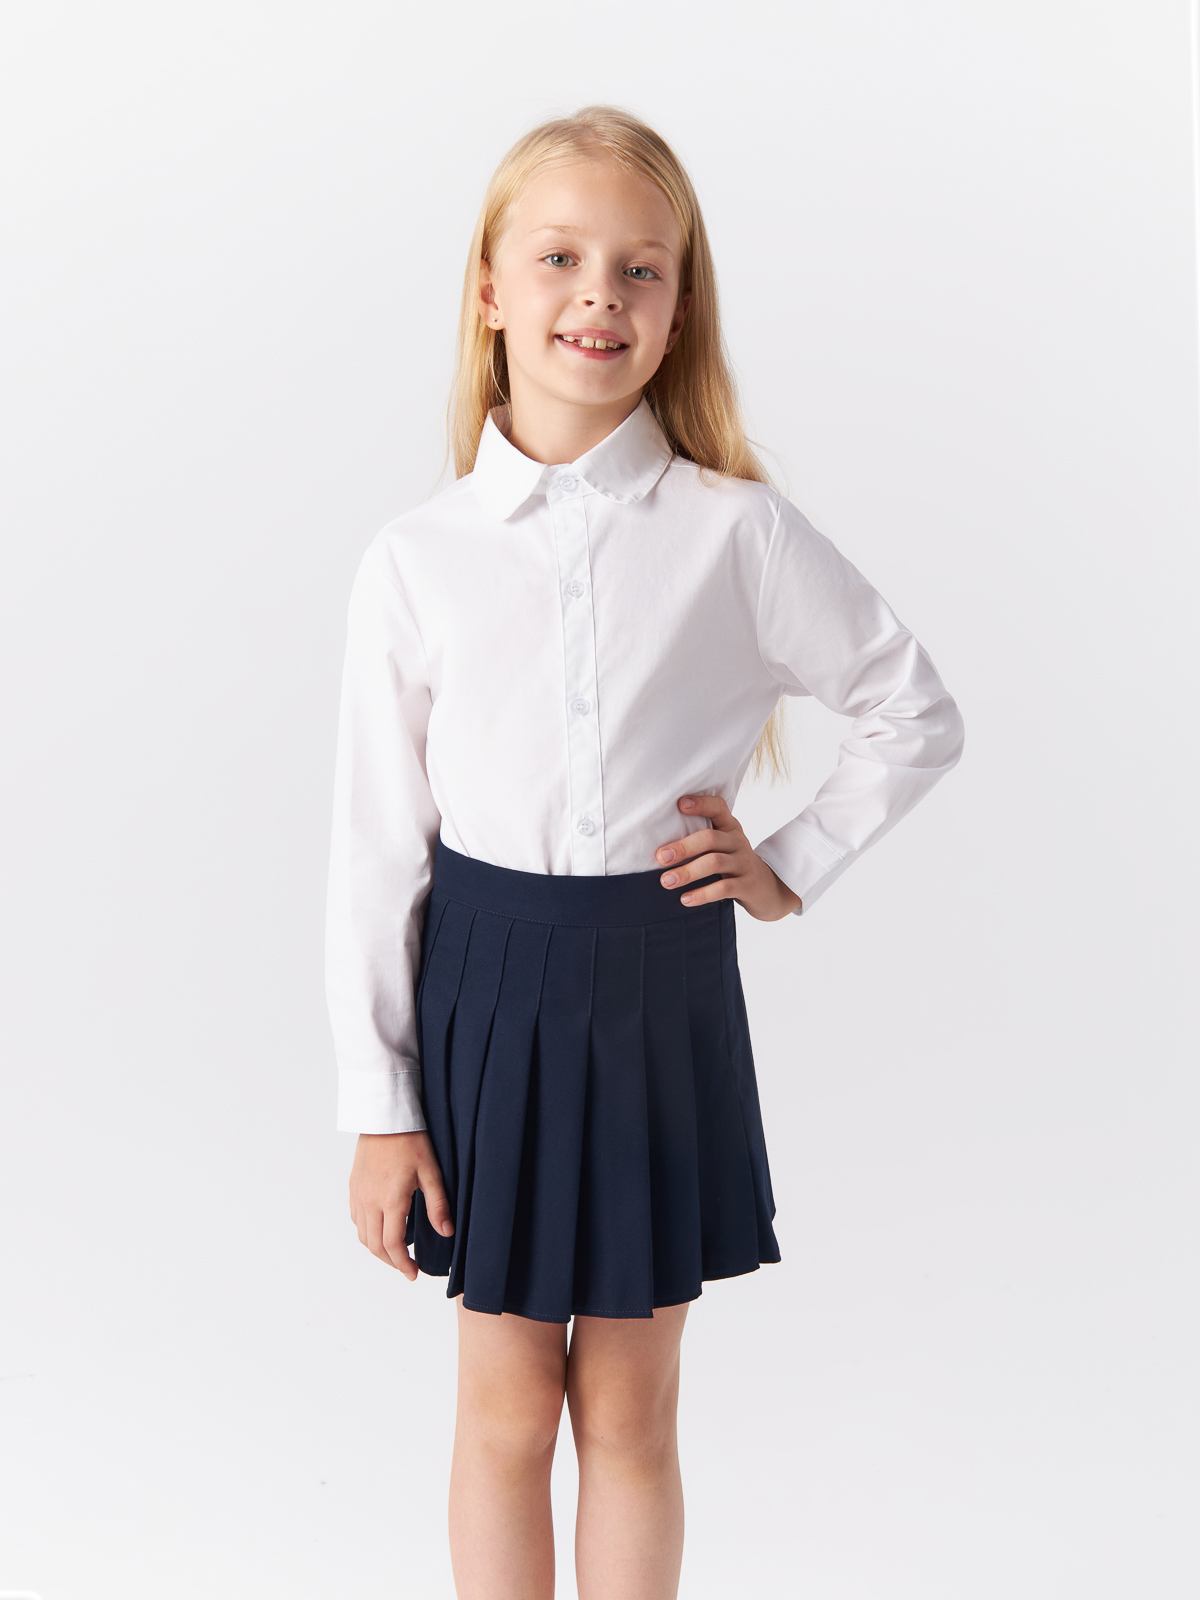 Блузка Yiwu Xflot Supply Chain детская, BS-1, размер 150 см блузка детская gulliver 12302gmc2203 белый размер 104